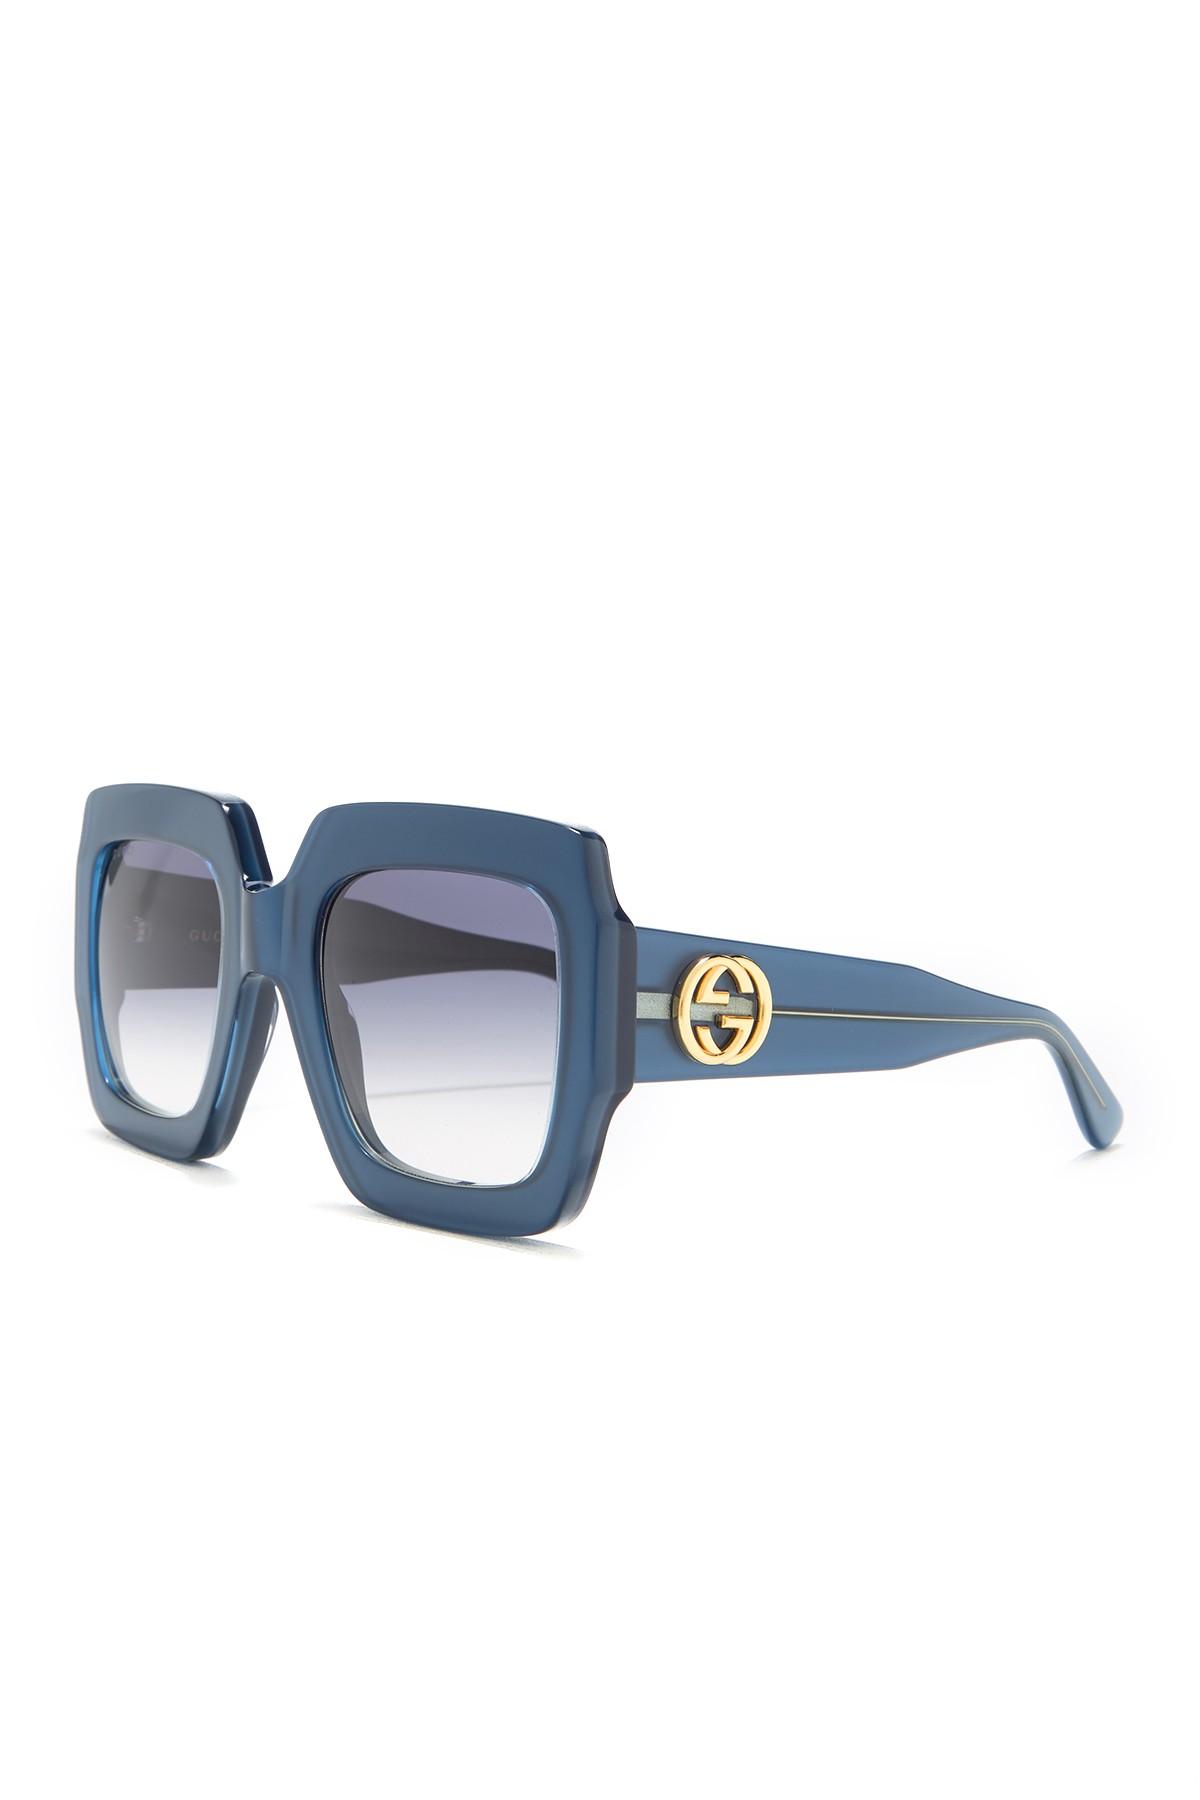 Gucci 54mm Oversized Square Sunglasses in Blue | Lyst